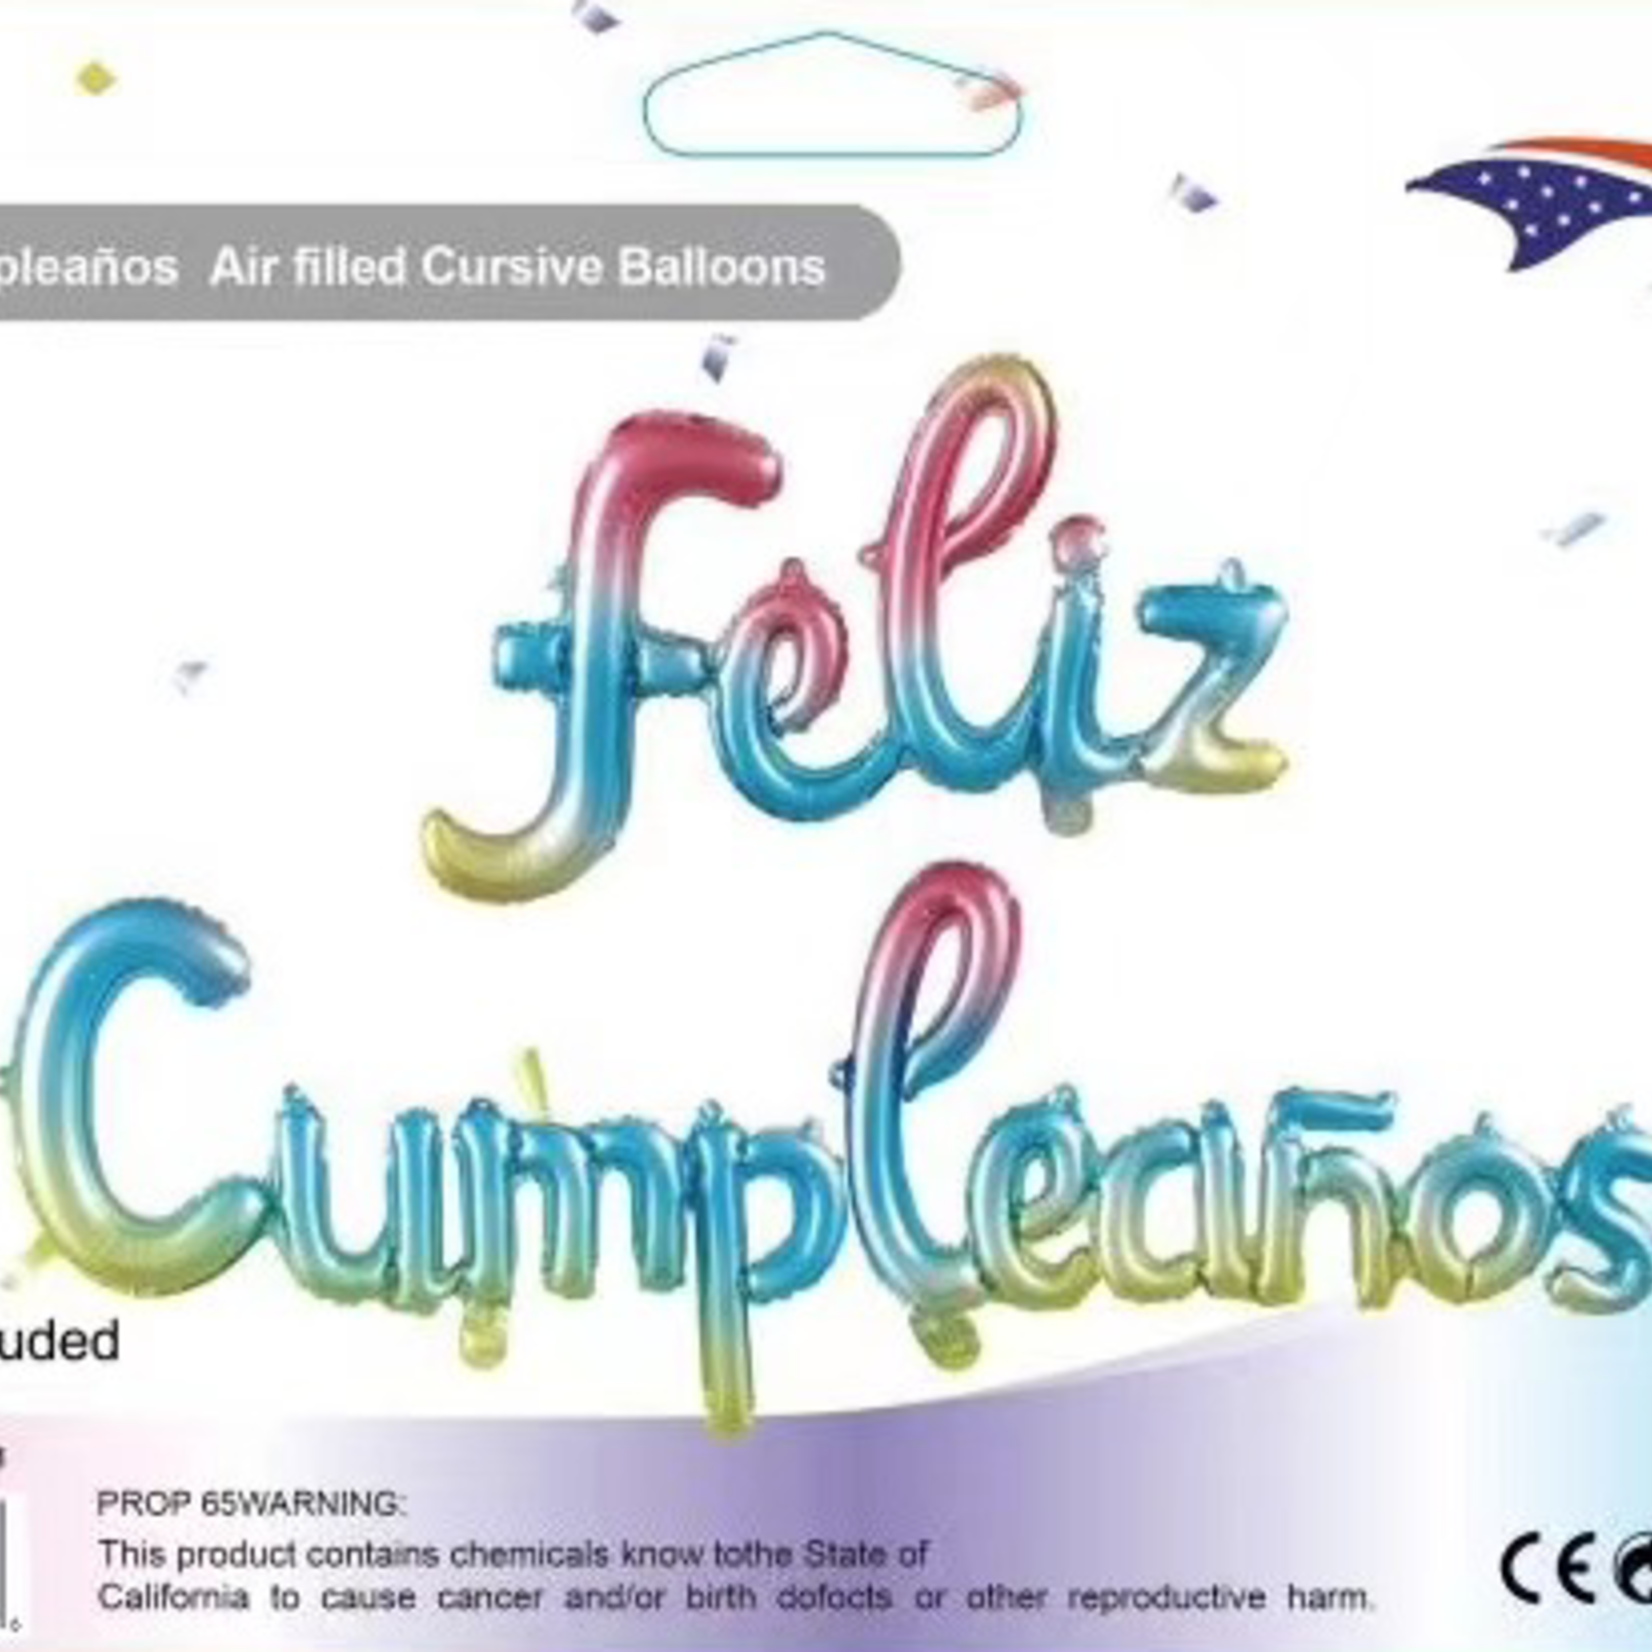 ''FELIZ CUMPLEANOS" RAINBOW CURSIVE BALLOON KIT